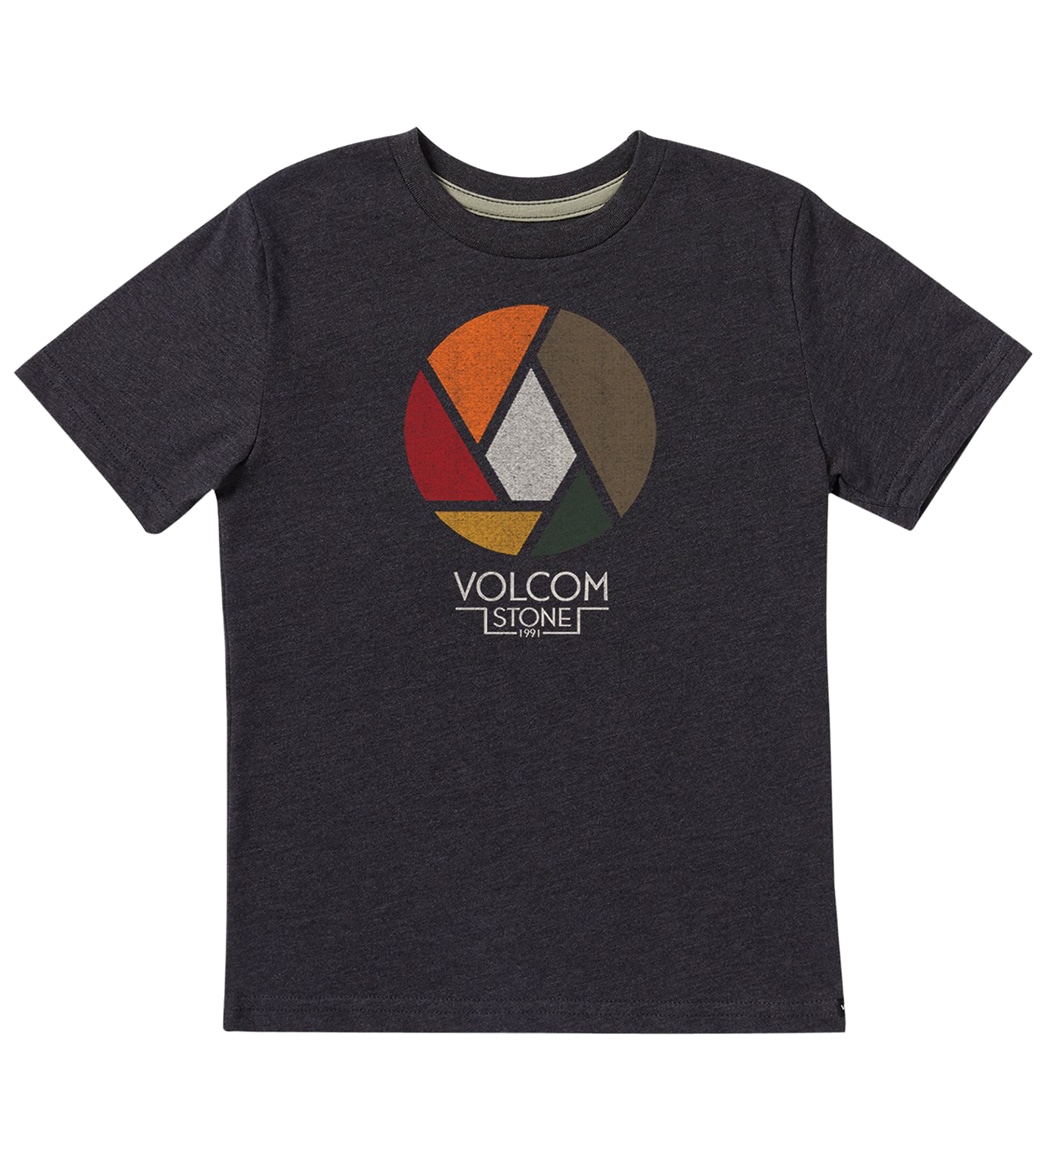 Volcom Boys' Splicer Short Sleeve T-Shirt - Heather Black Large Cotton/Polyester - Swimoutlet.com